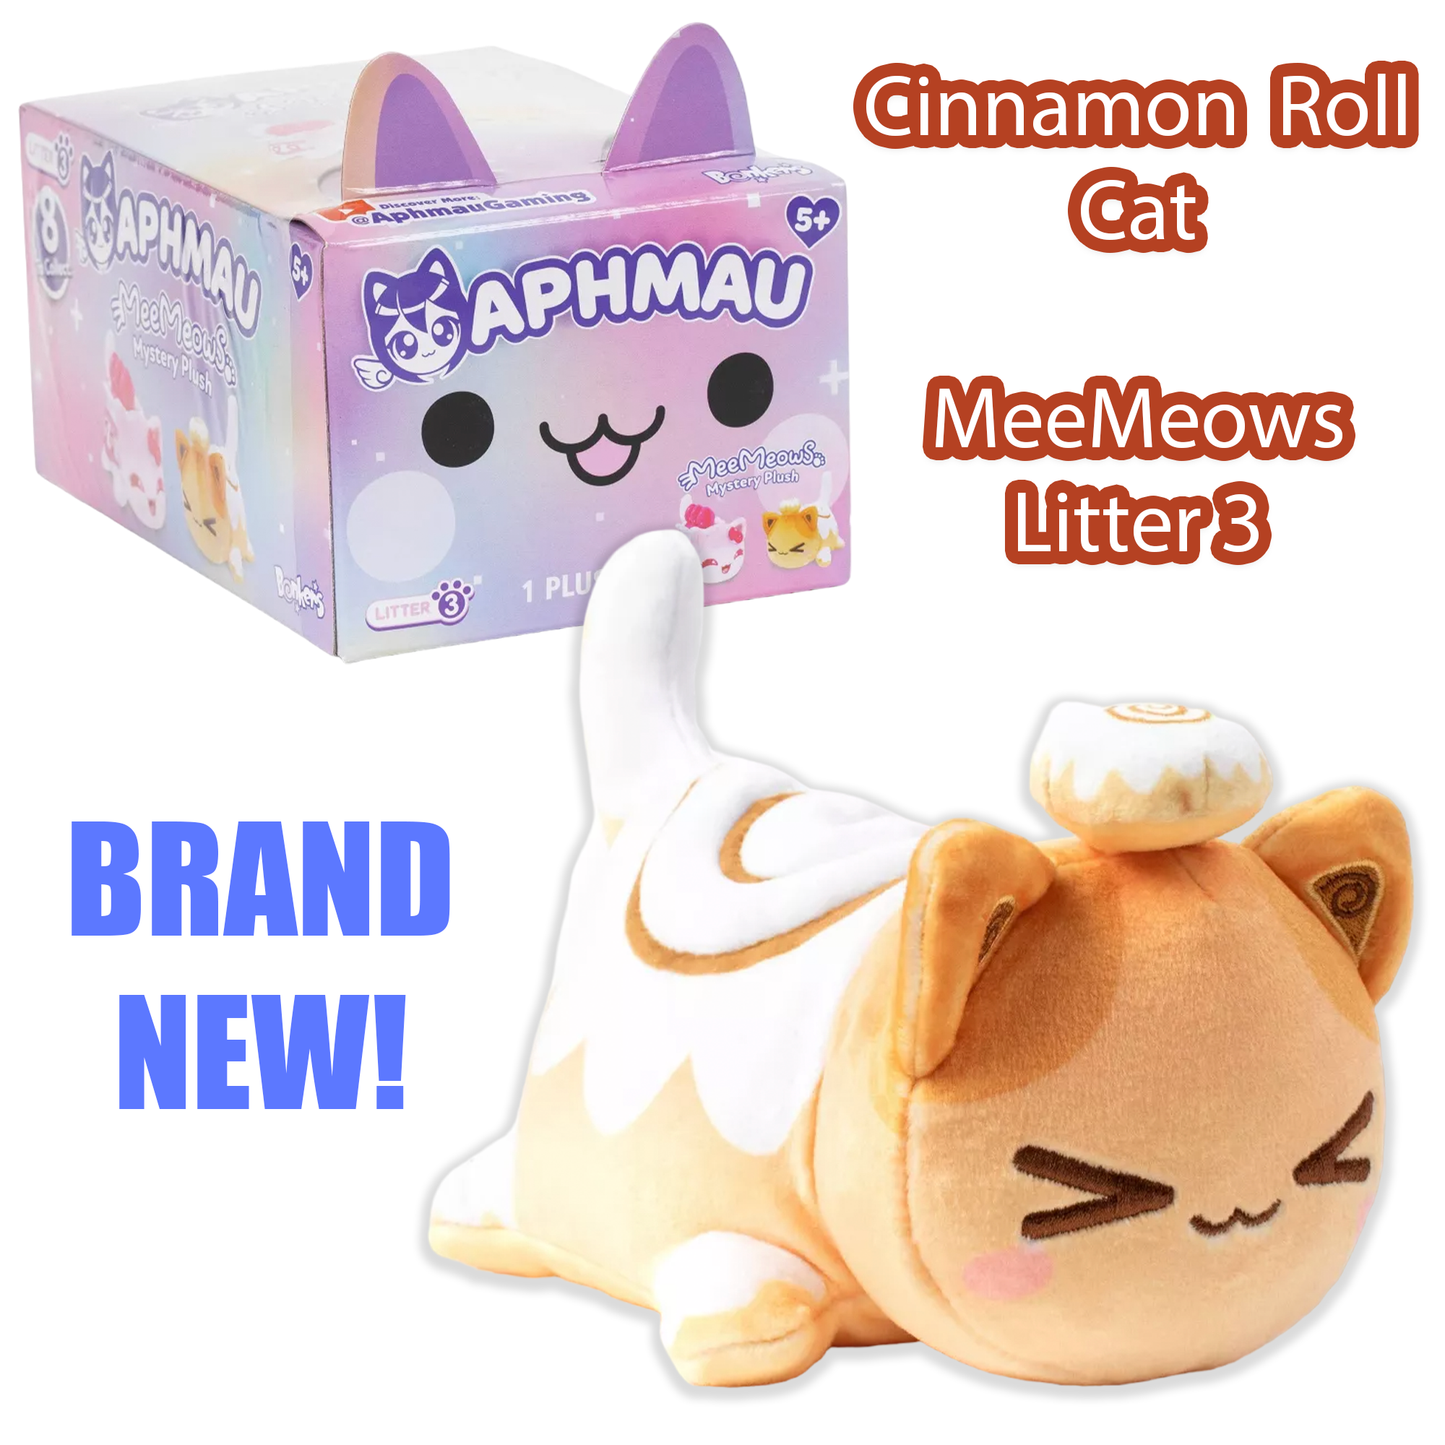 CINNAMON ROLL CAT - MeeMeows Litter 3 from Aphmau (BRAND NEW) RARE Kitty Plushie